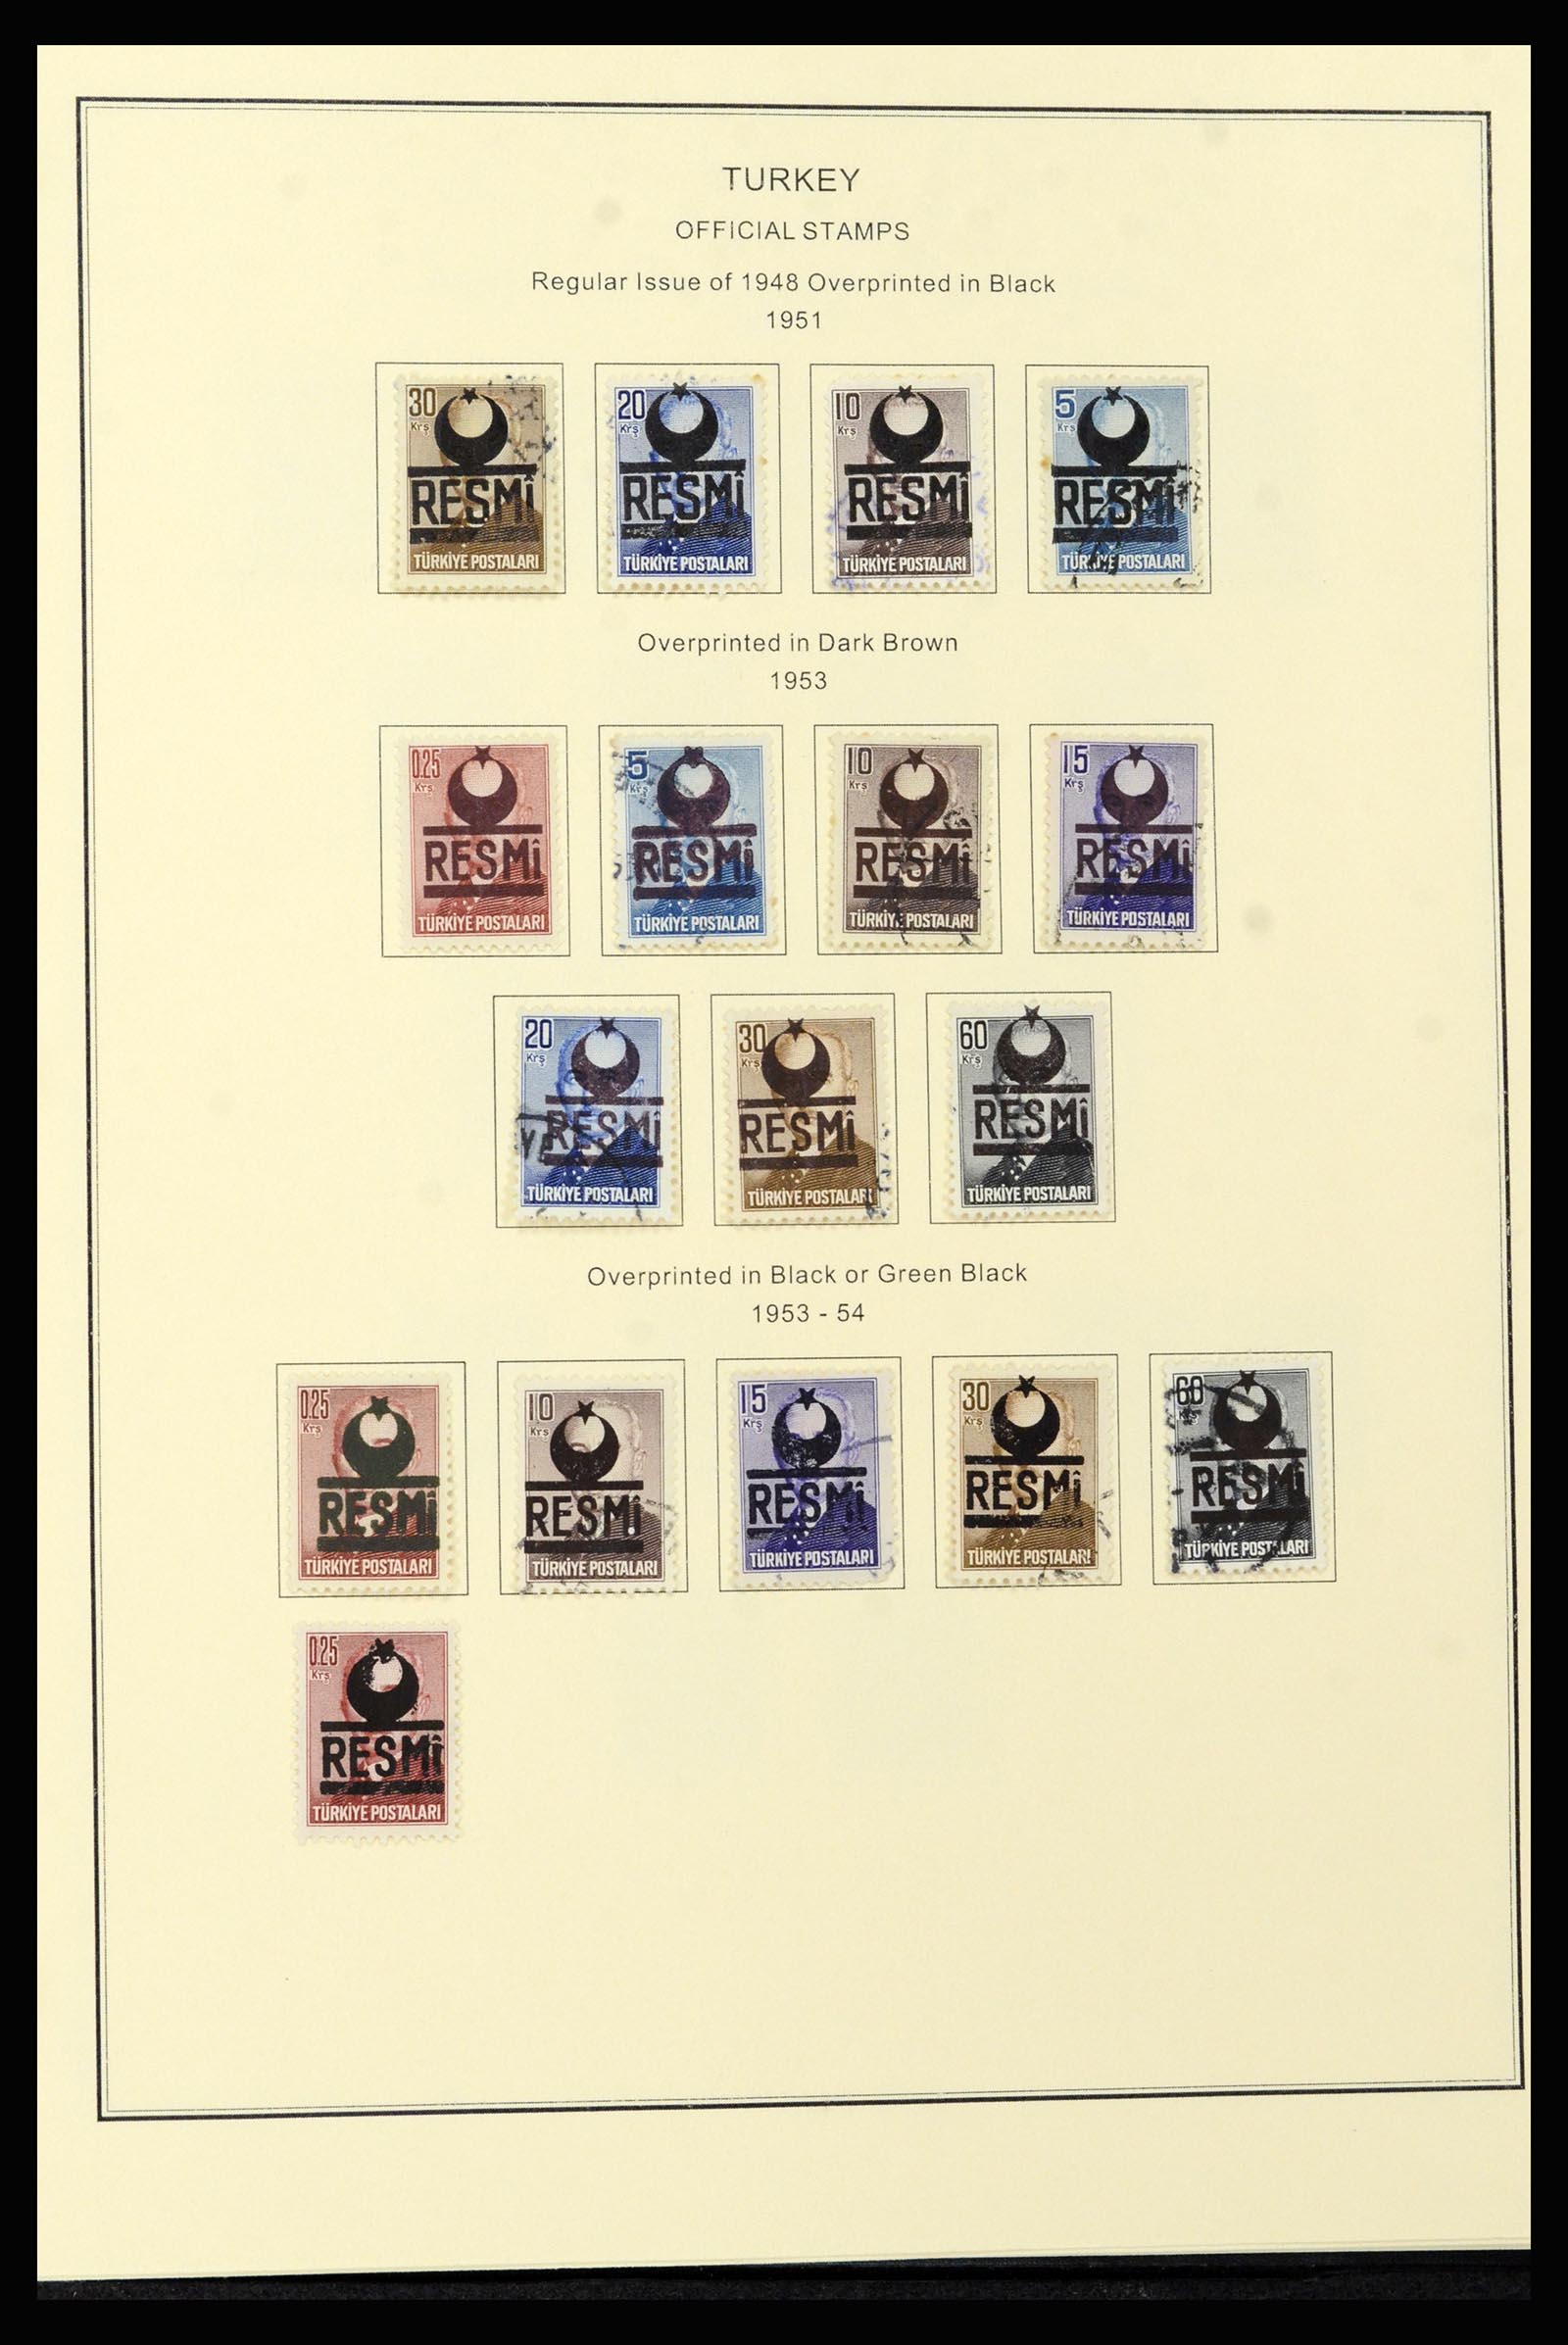 37224 070 - Stamp collection 37224 Turkey 1863-2000.